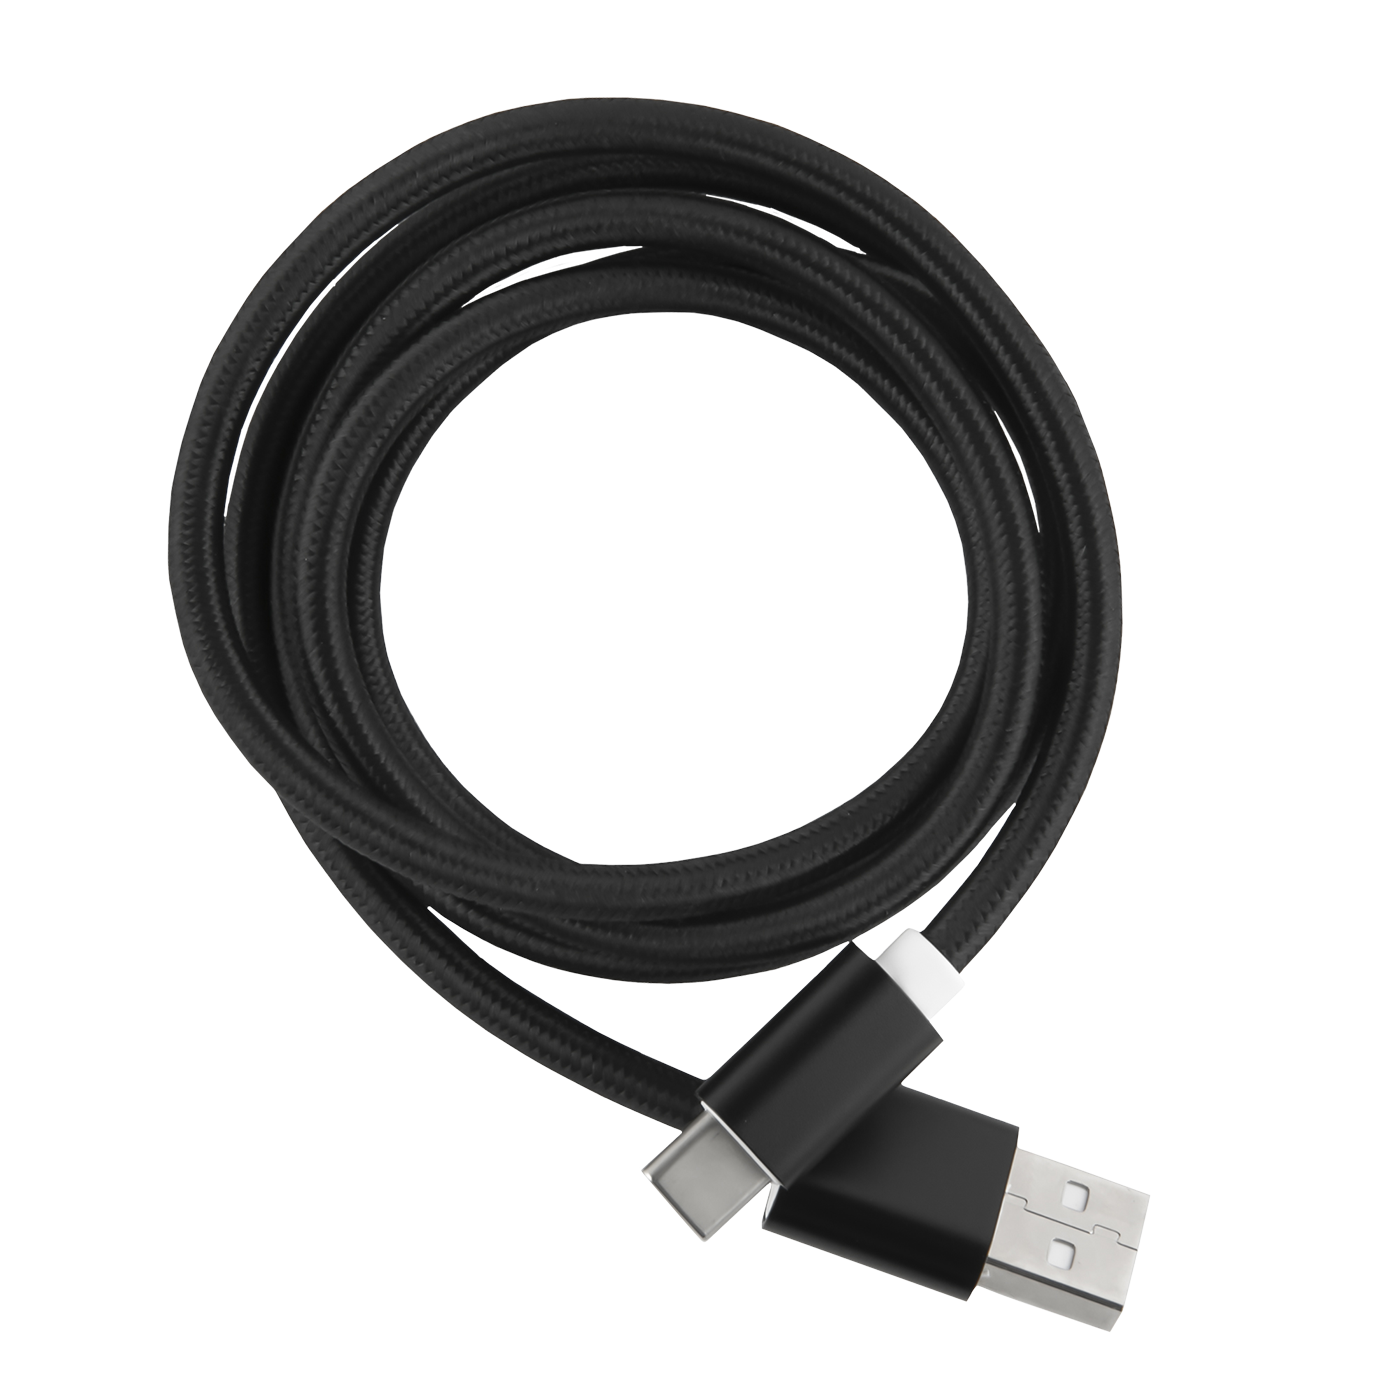 Дата-кабель Red Line USB - Type-C 2.0